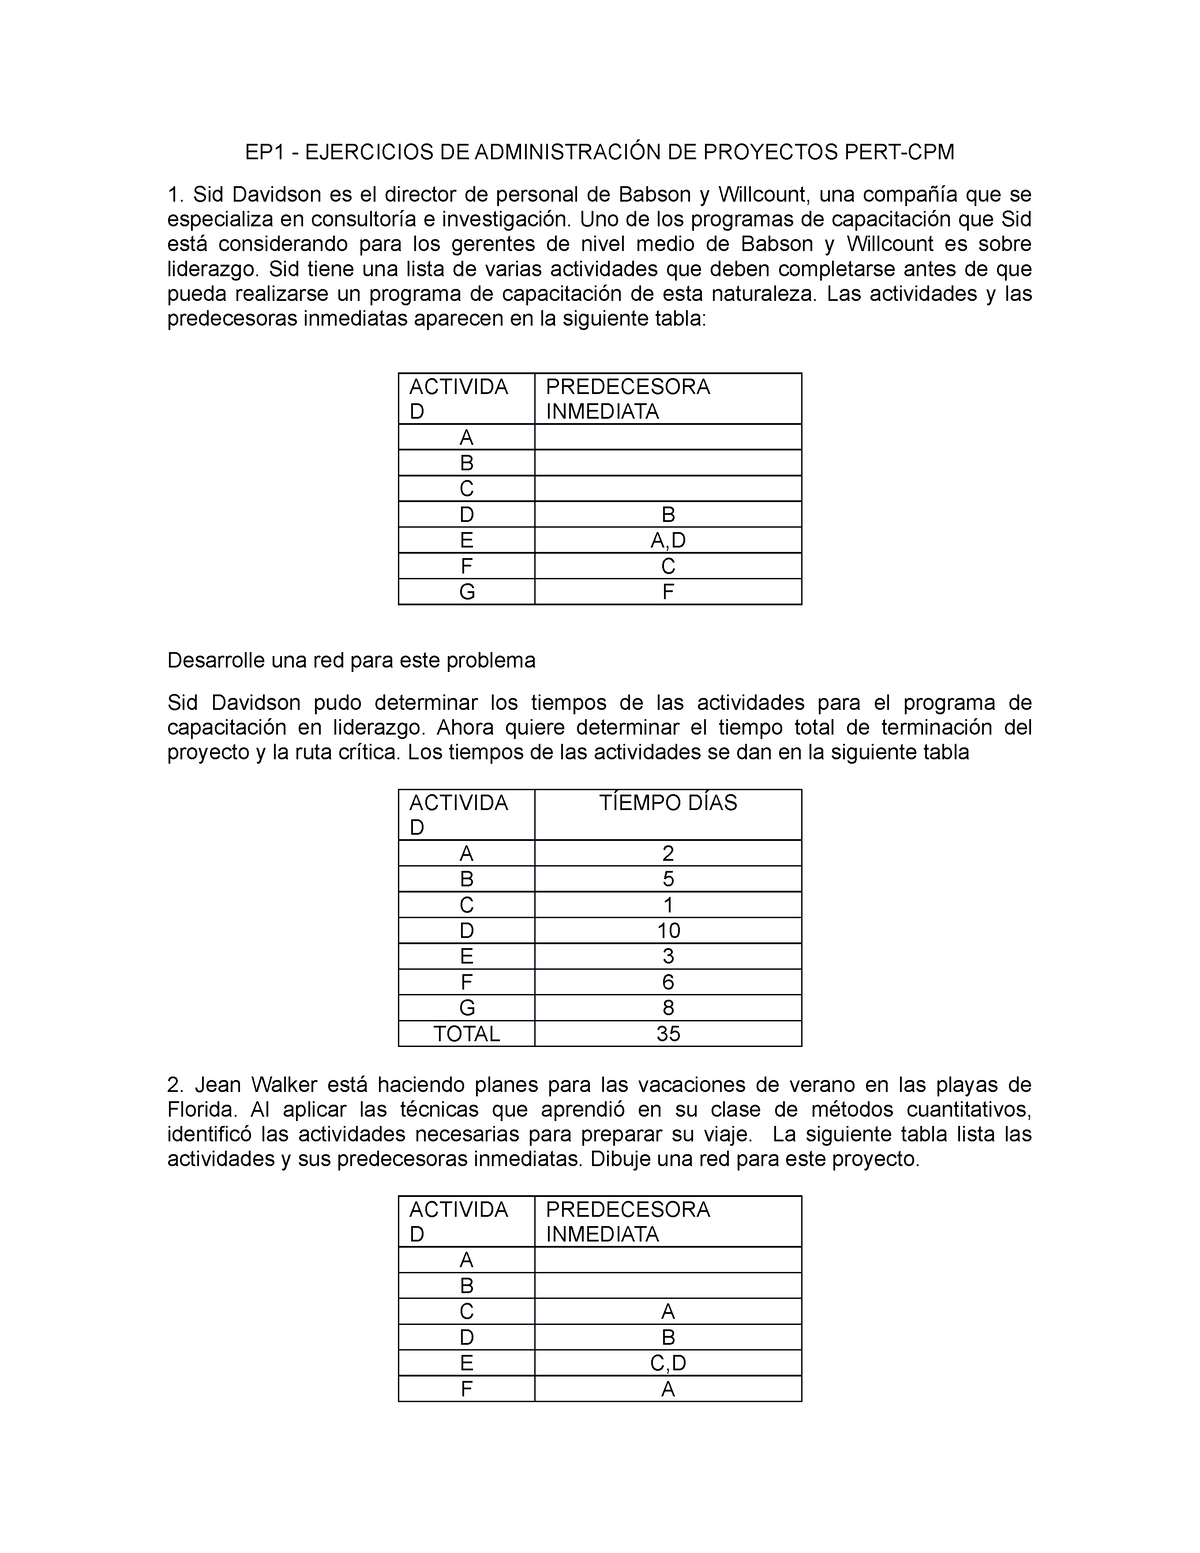 236031760 Ejercicios DE Administracion DE Proyectos PERT docx - EP1 ...